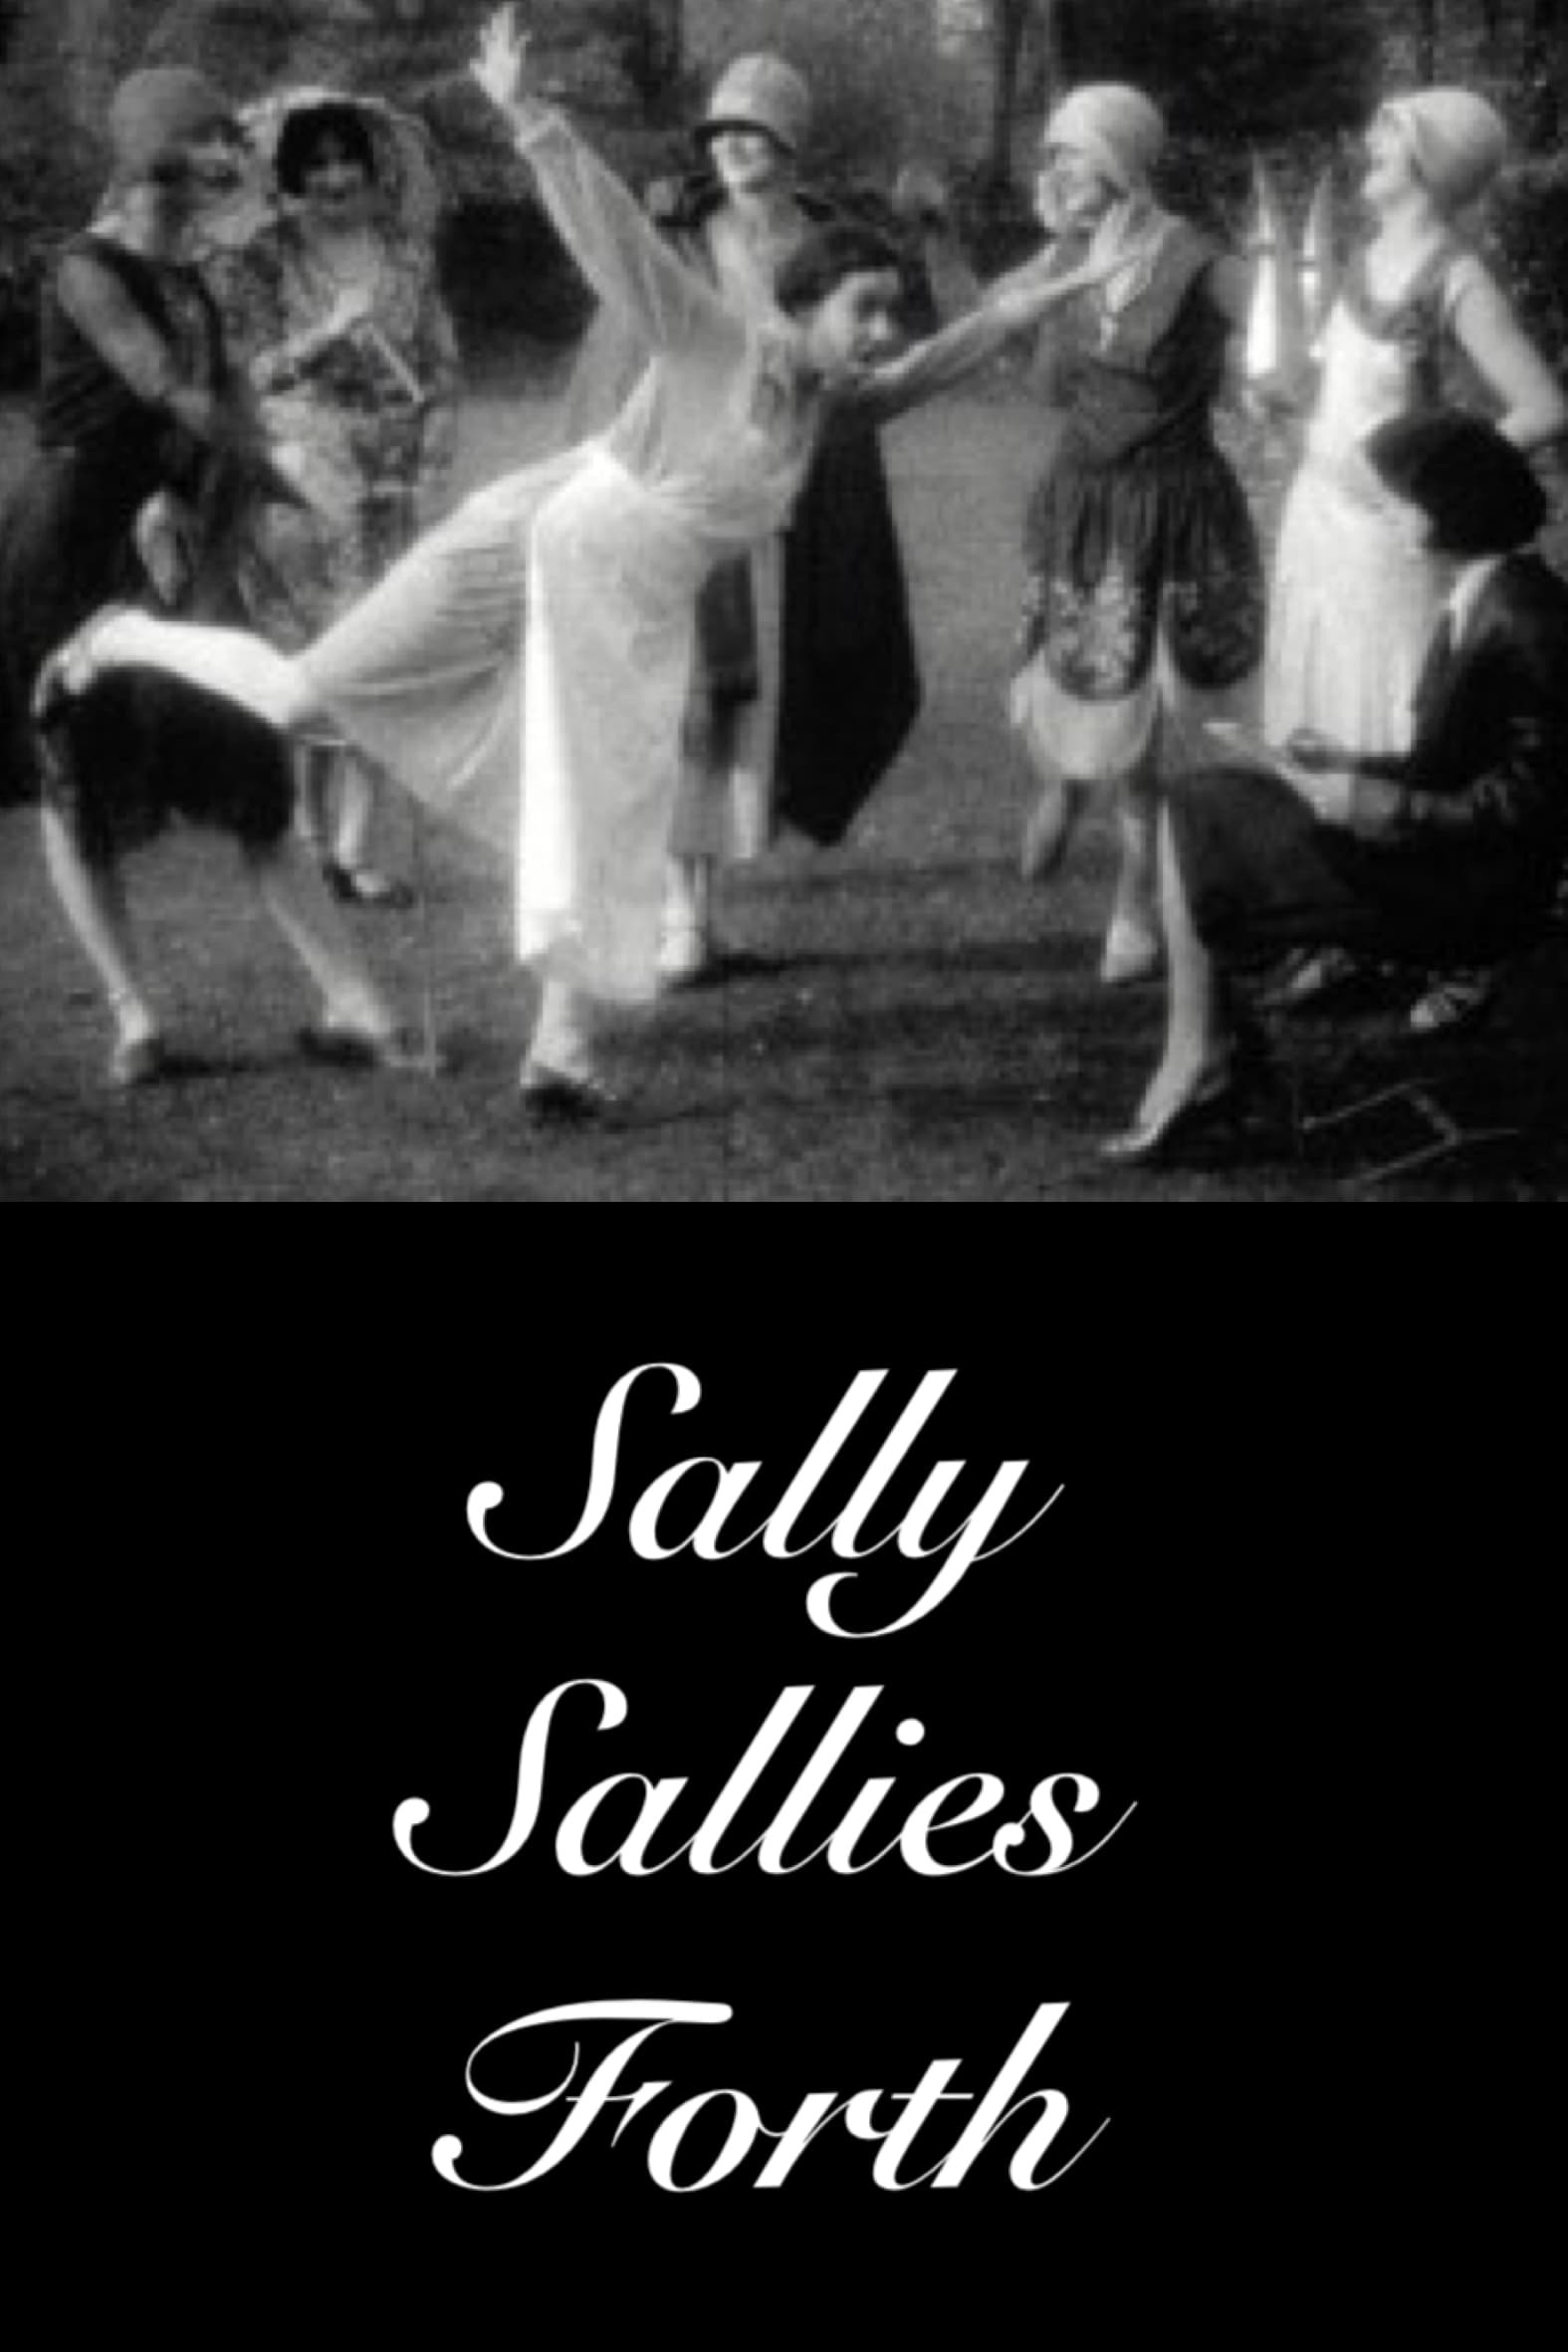 Sally Sallies Forth